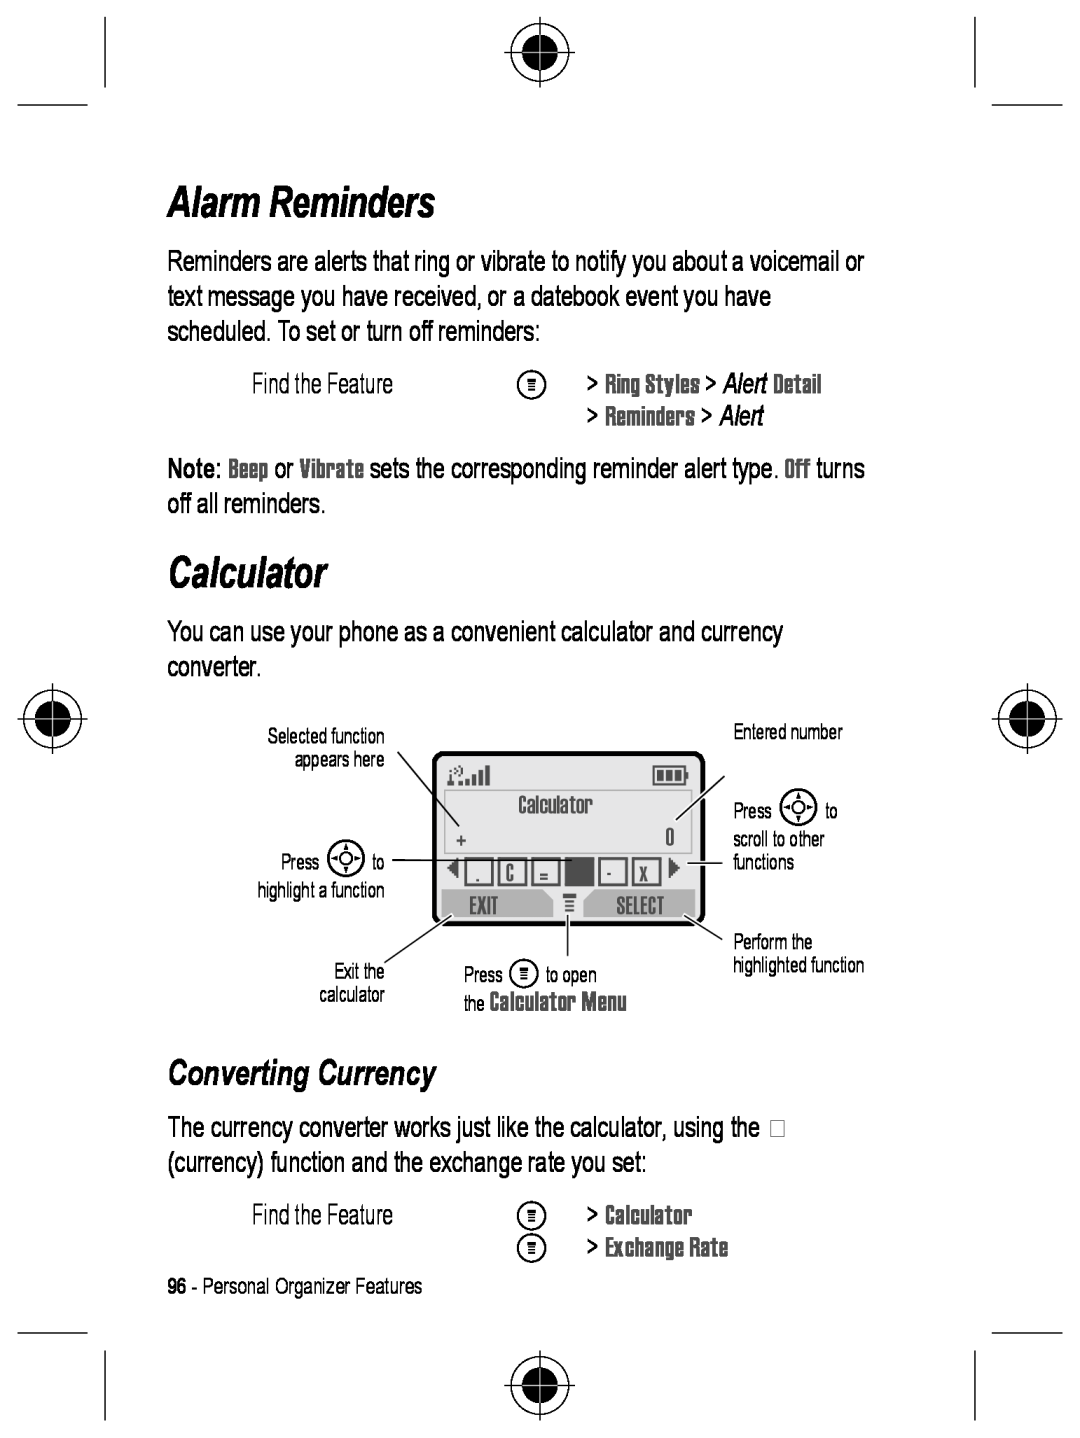 Motorola C330 manual Alarm Reminders, Calculator, Converting Currency, M Ring Styles Alert Detail, Reminders Alert 